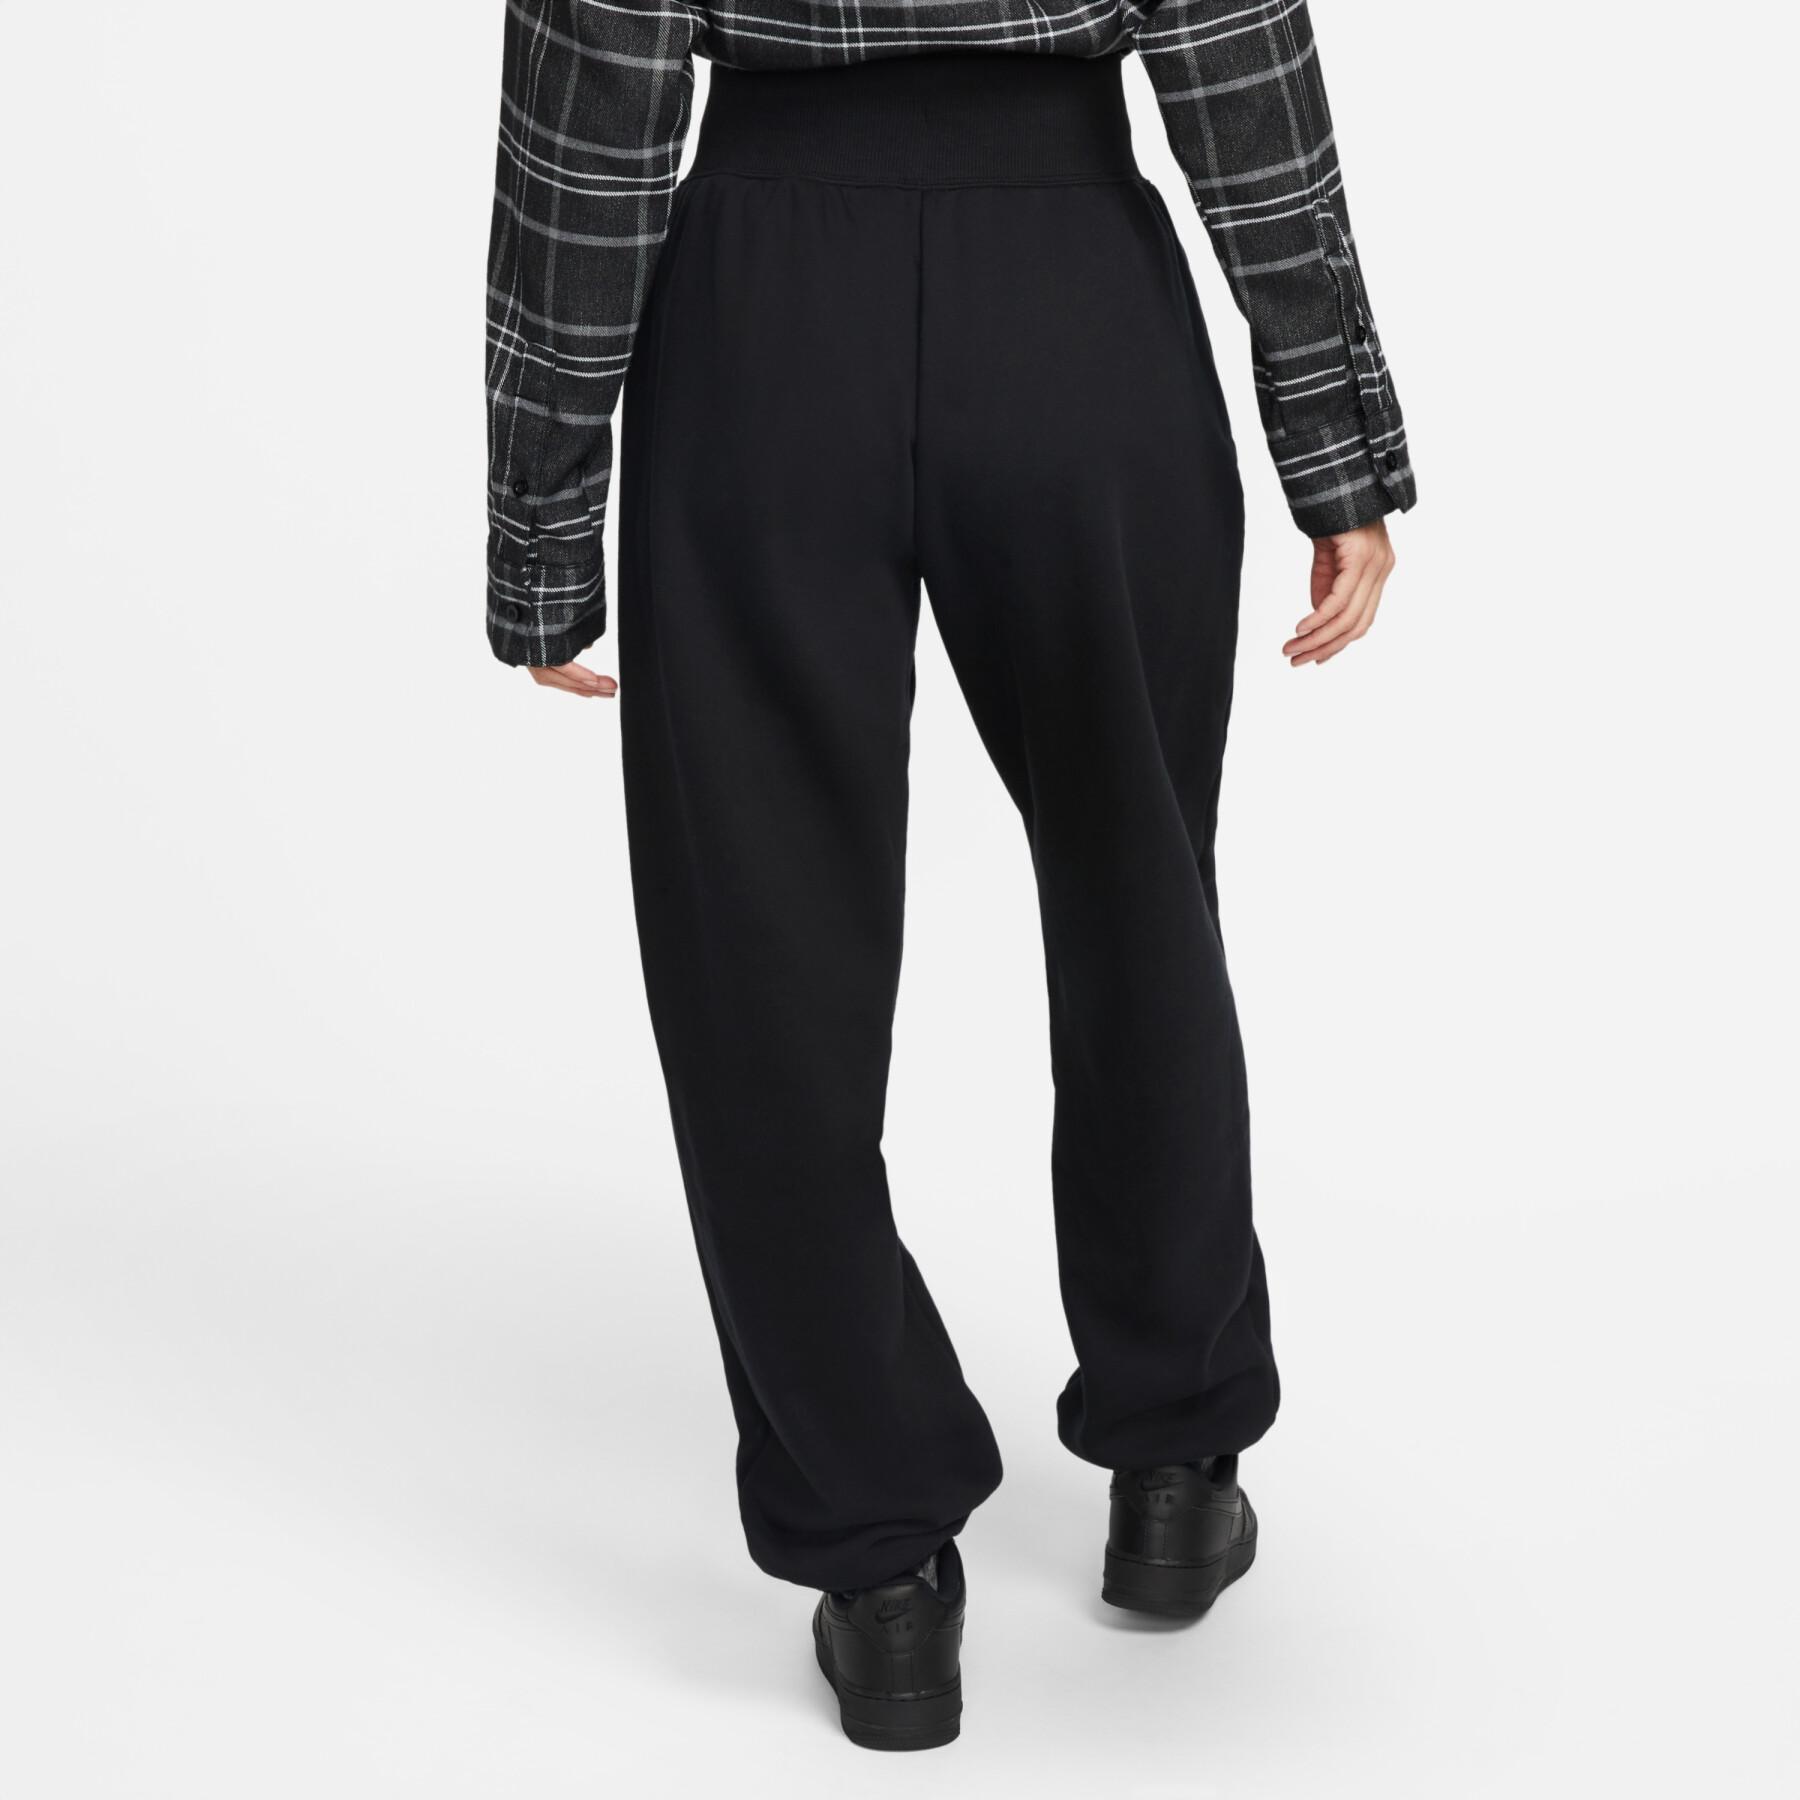 Women's oversized high-waisted jogging suit Nike Phoenix Fleece